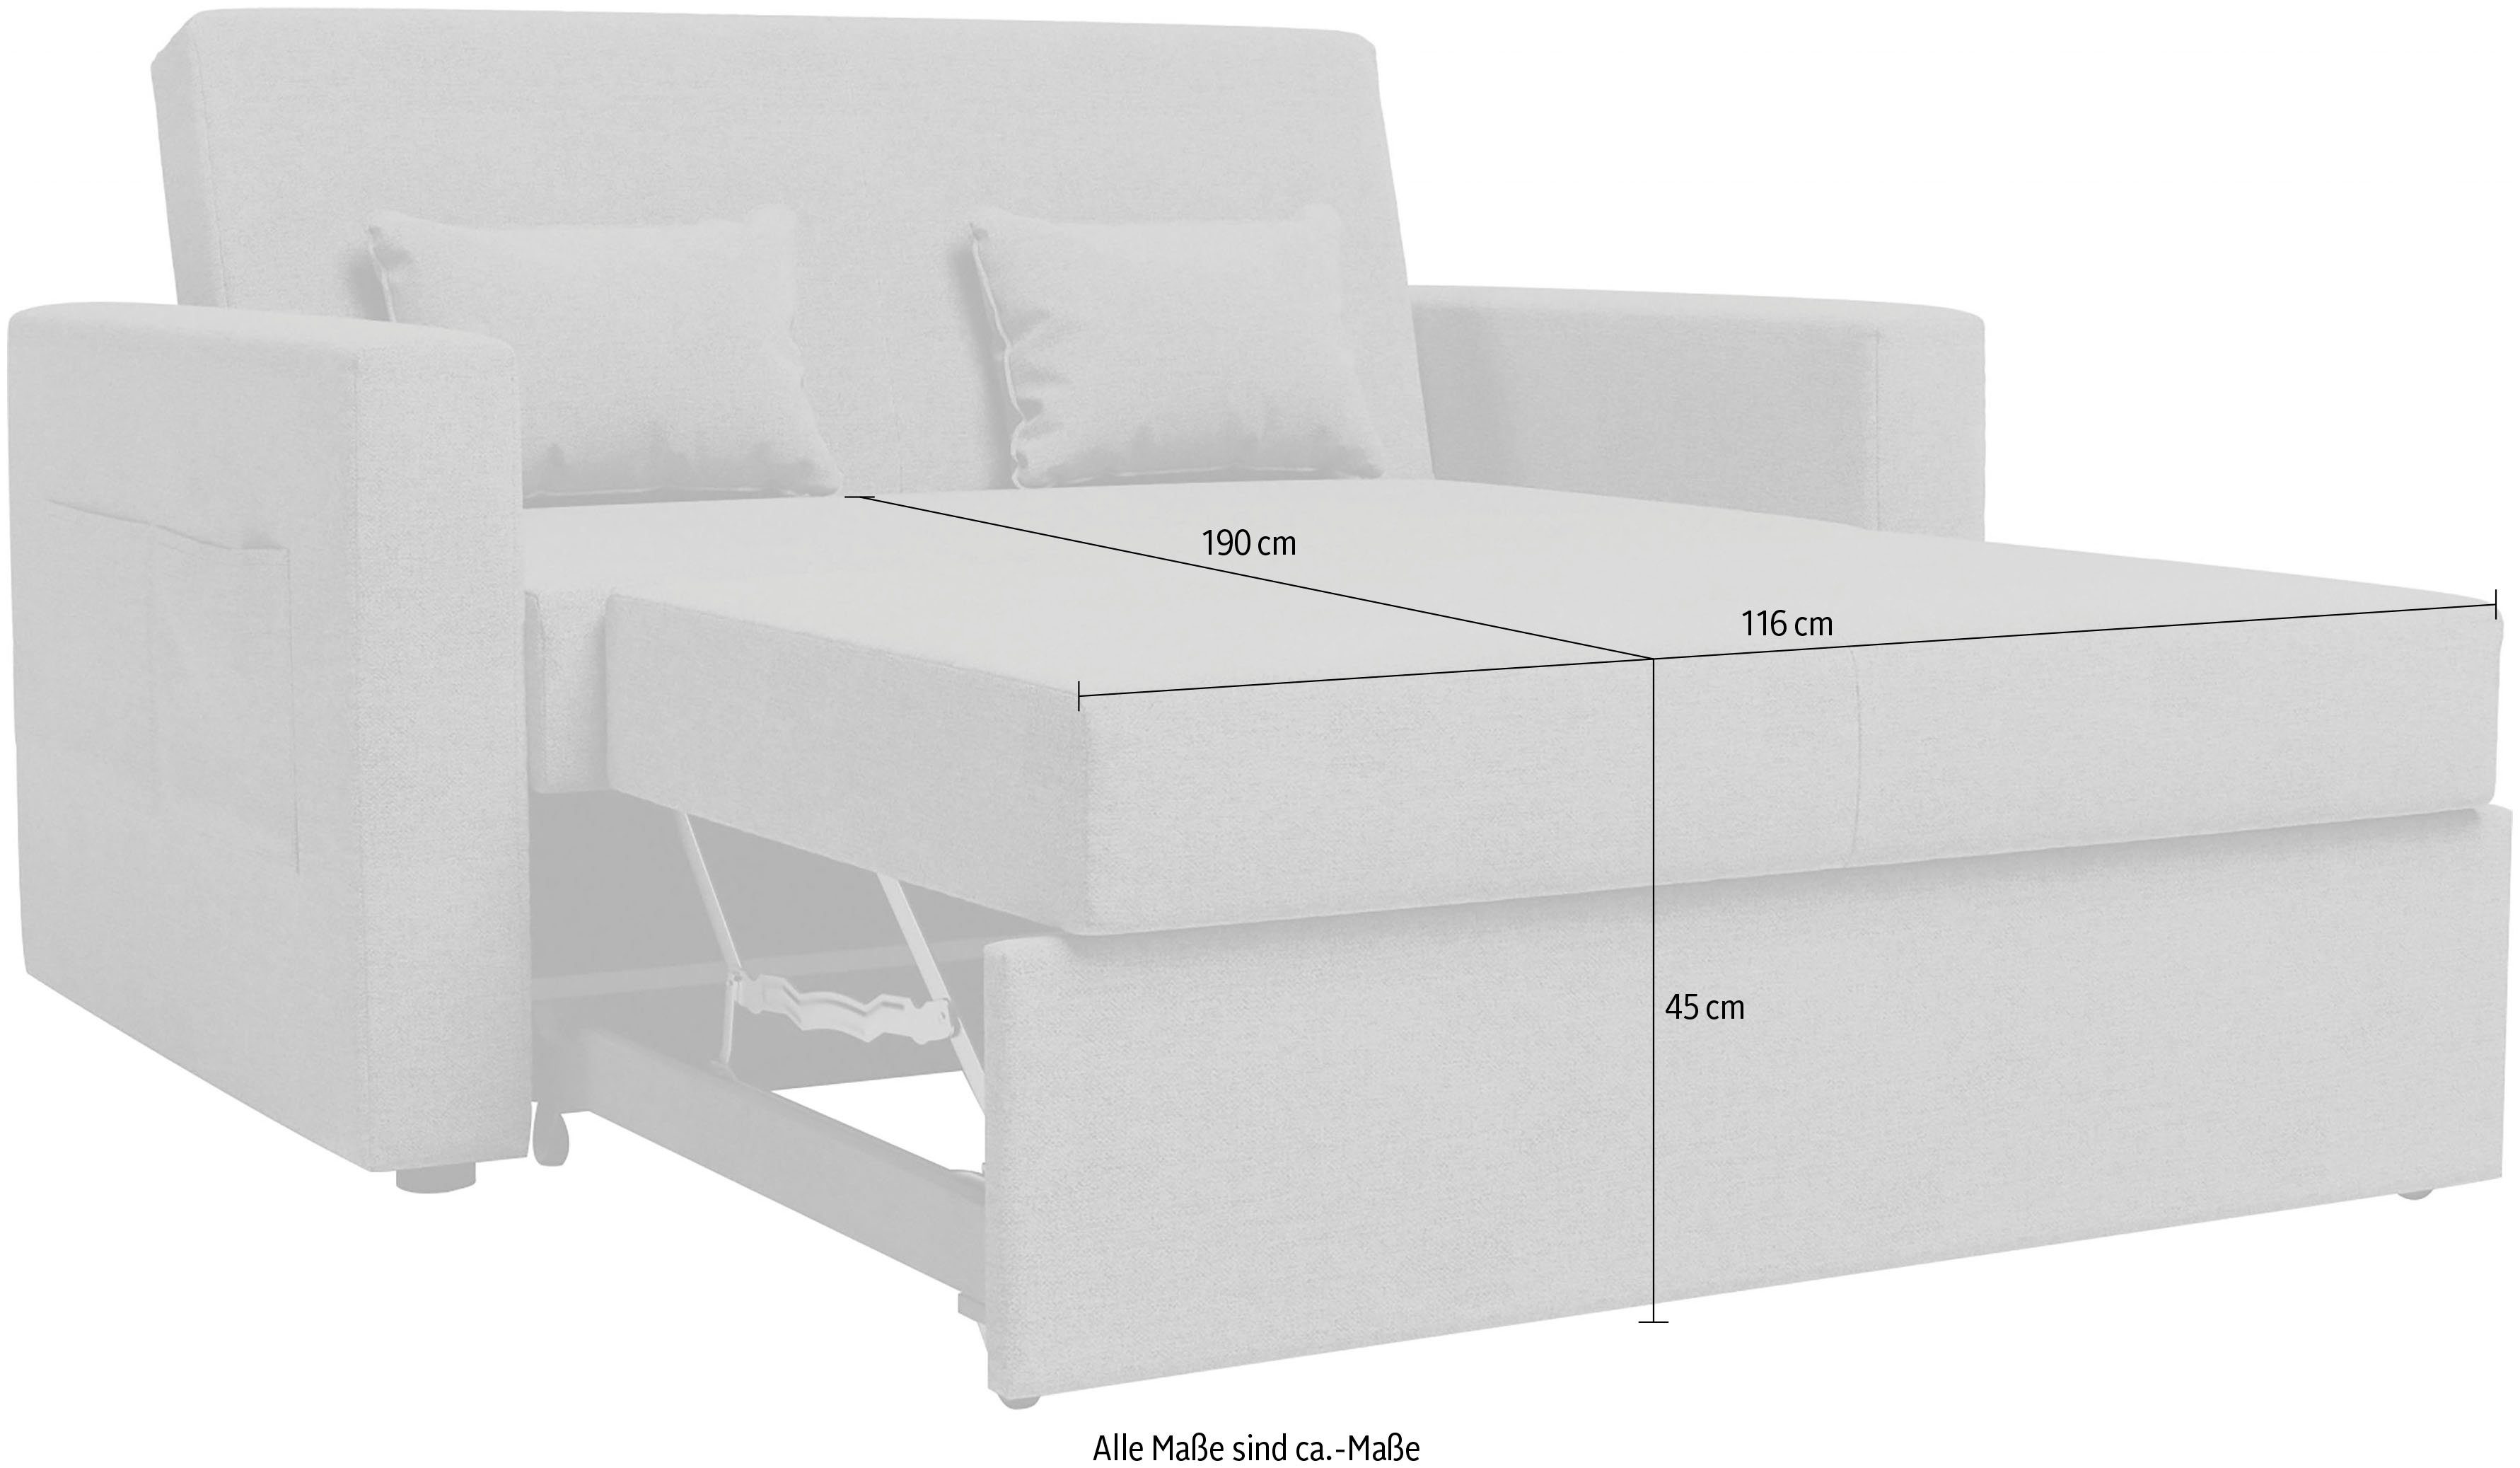 INOSIGN Schlafsofa Ravena, kompaktes 2-Sitzer mit Sofa, Bettfunktion beige